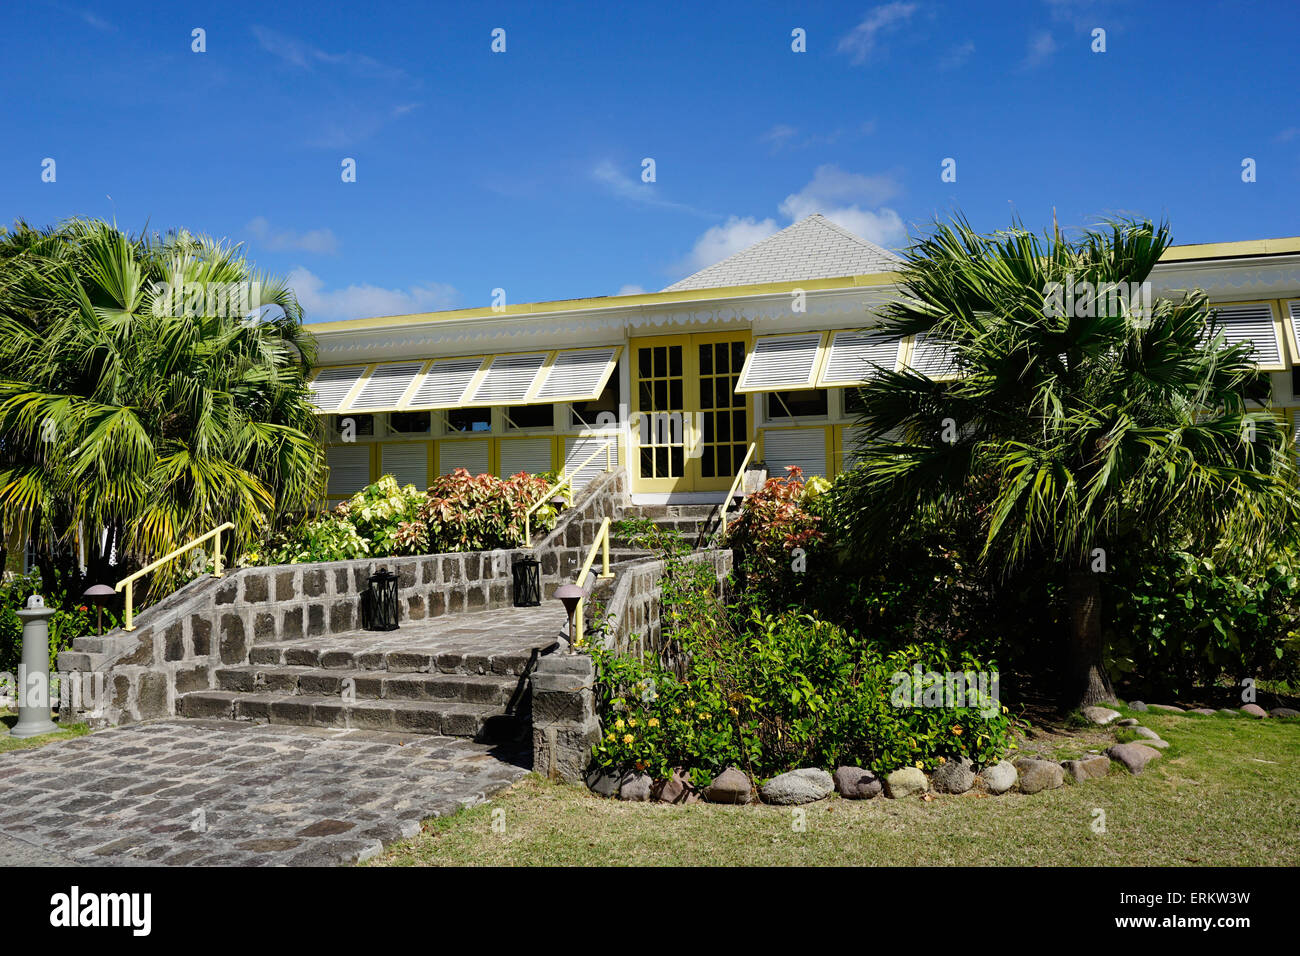 Vecchia piantagione House, Nesbit Beach Club di Nevis, Saint Kitts e Nevis, Isole Sottovento, West Indies, dei Caraibi e America centrale Foto Stock